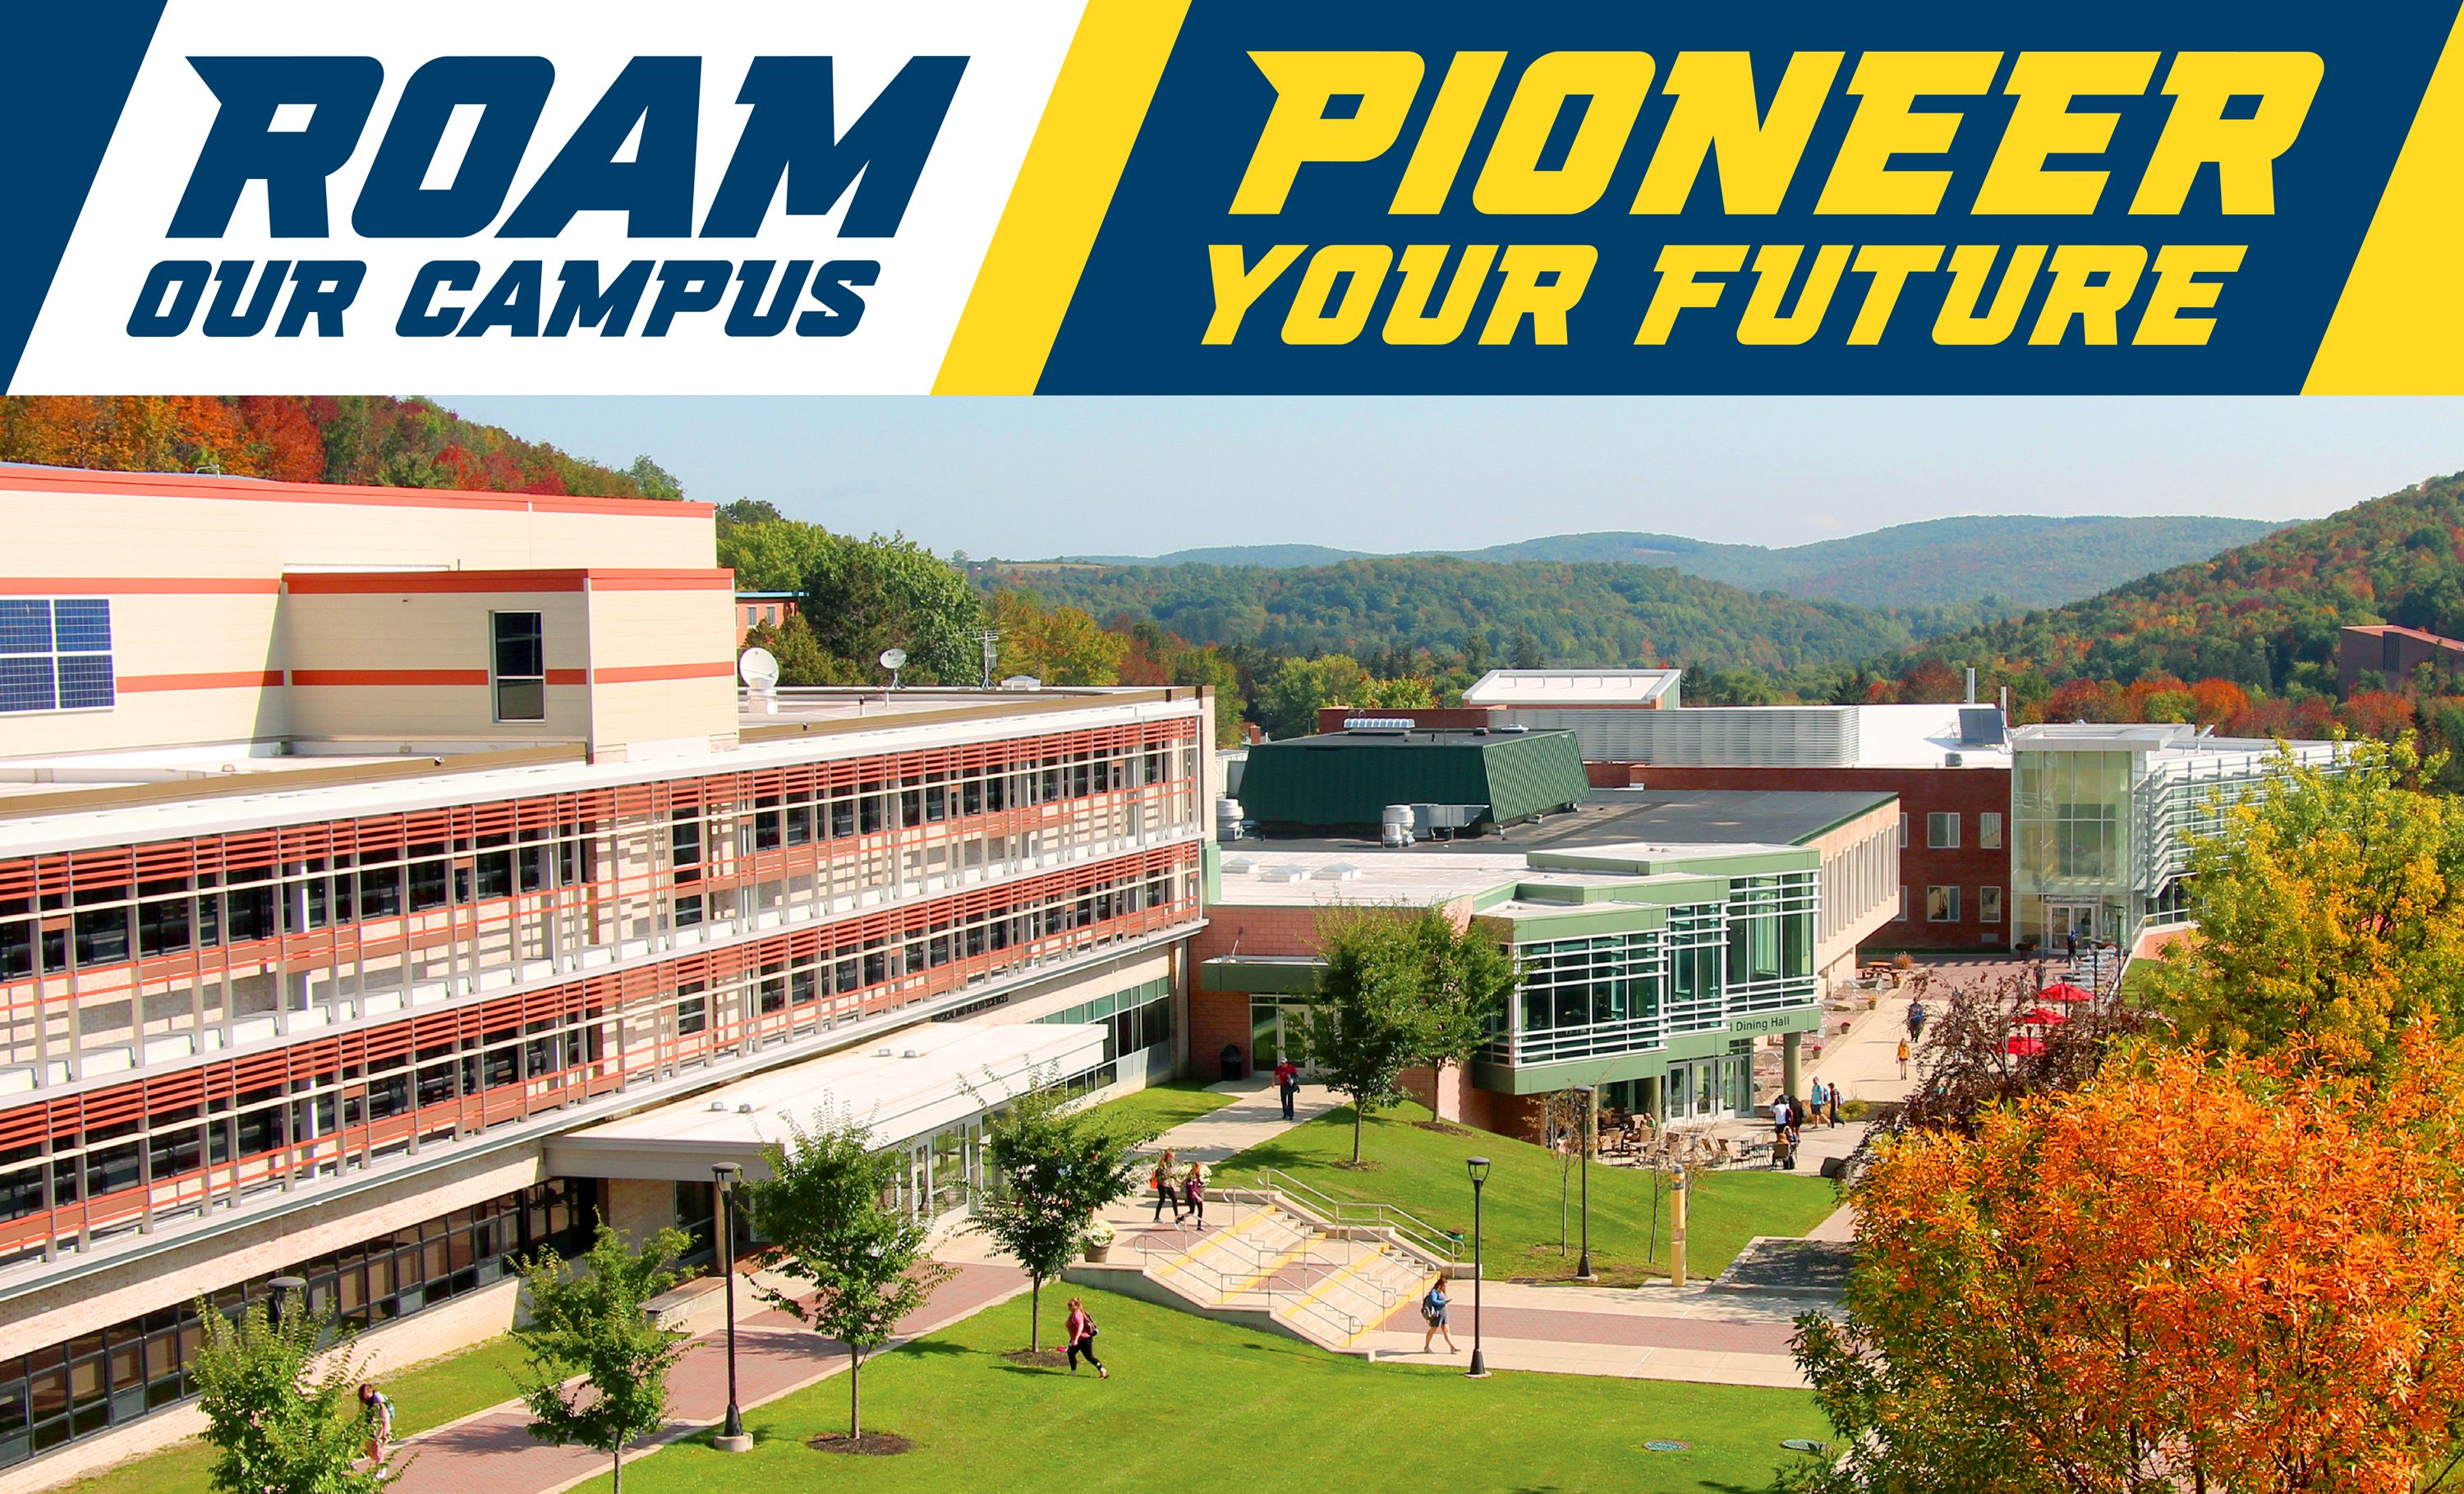 Roam our Campus: Pioneer your Future